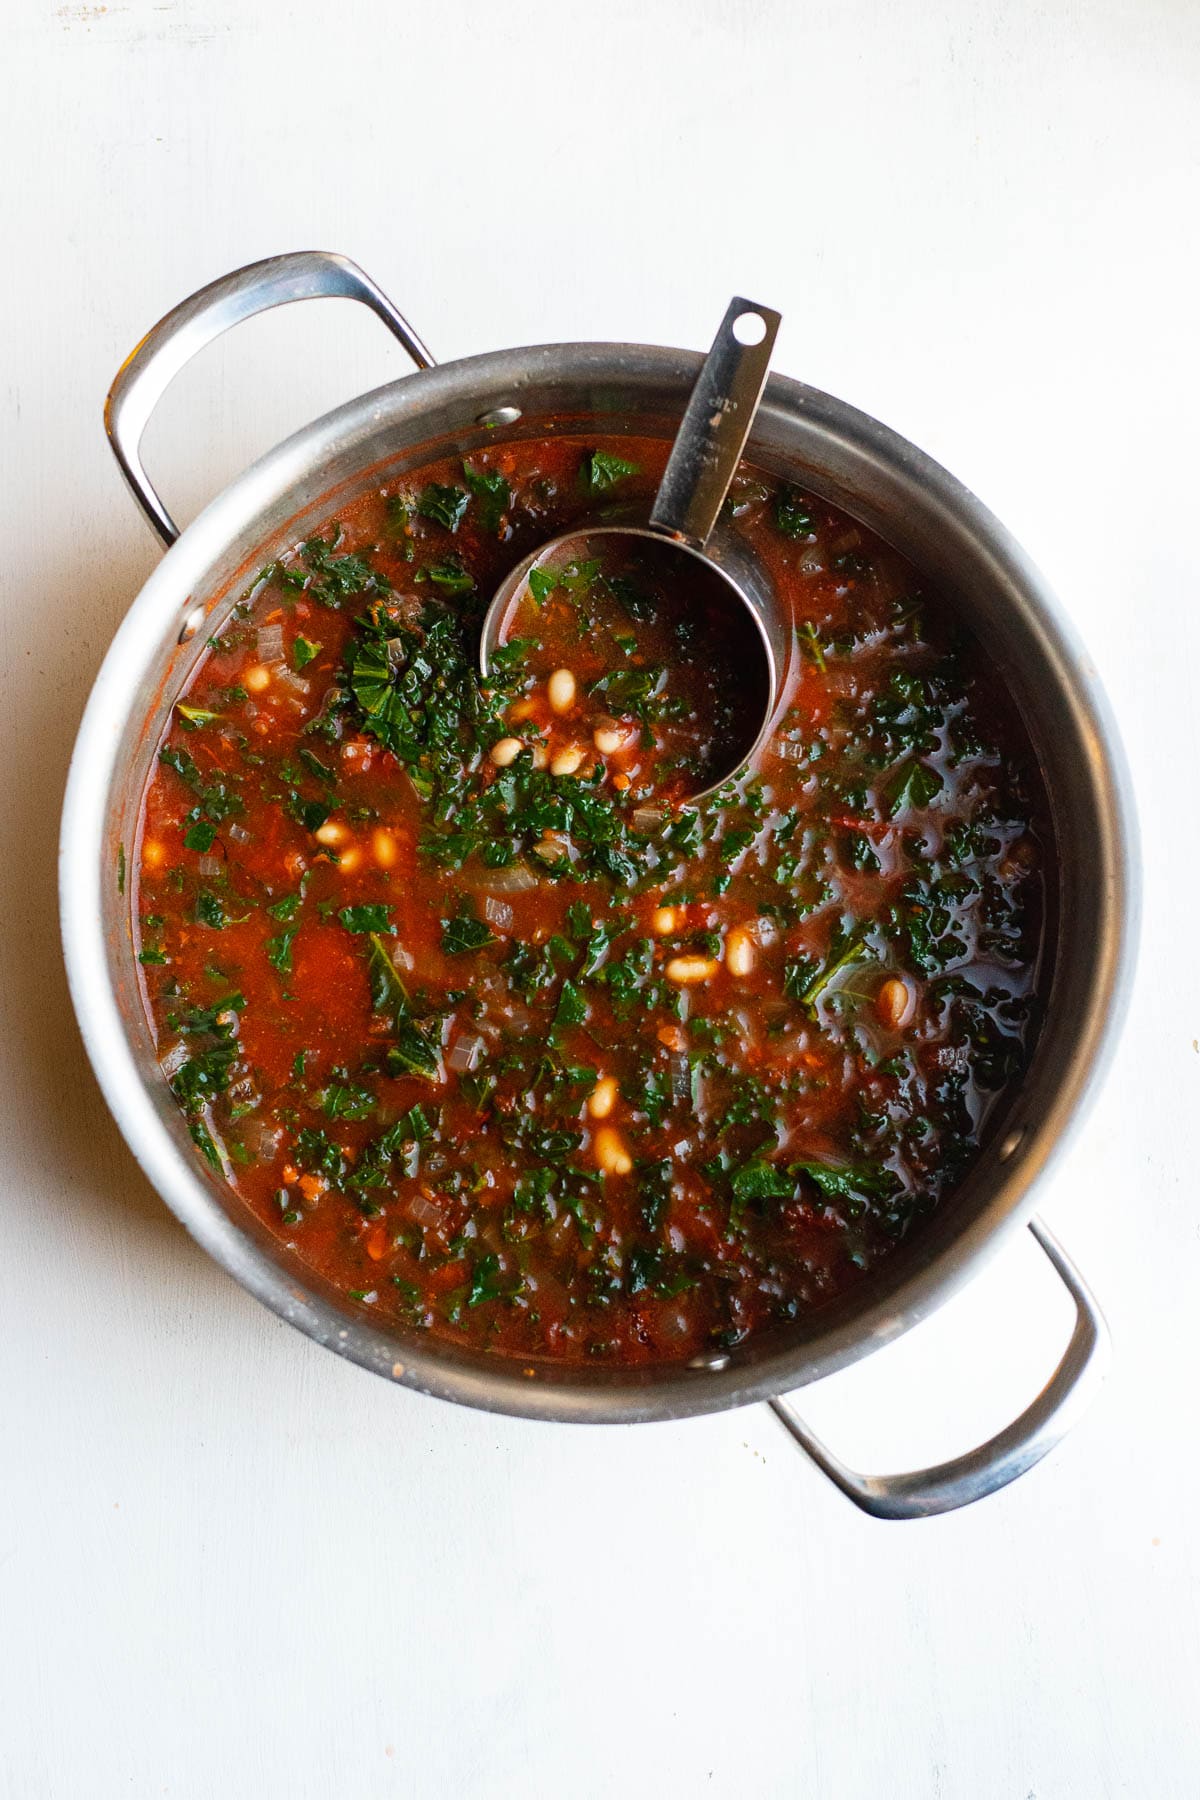 tomato kale soup in a large pot